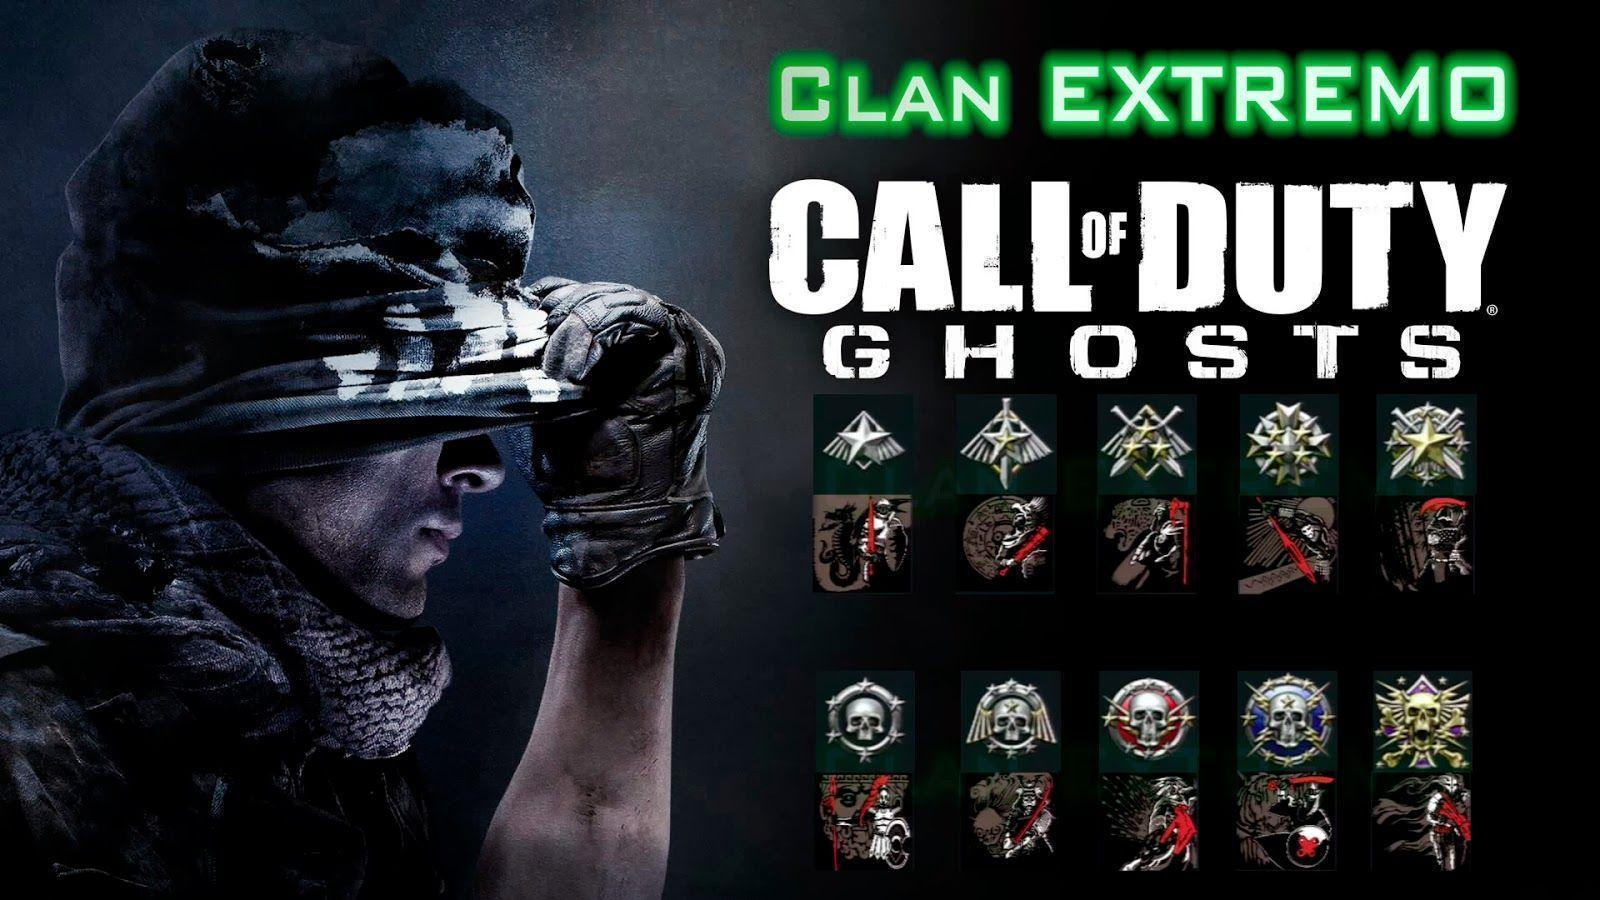 AmazingPict.com. Call of Duty Ghosts Badges